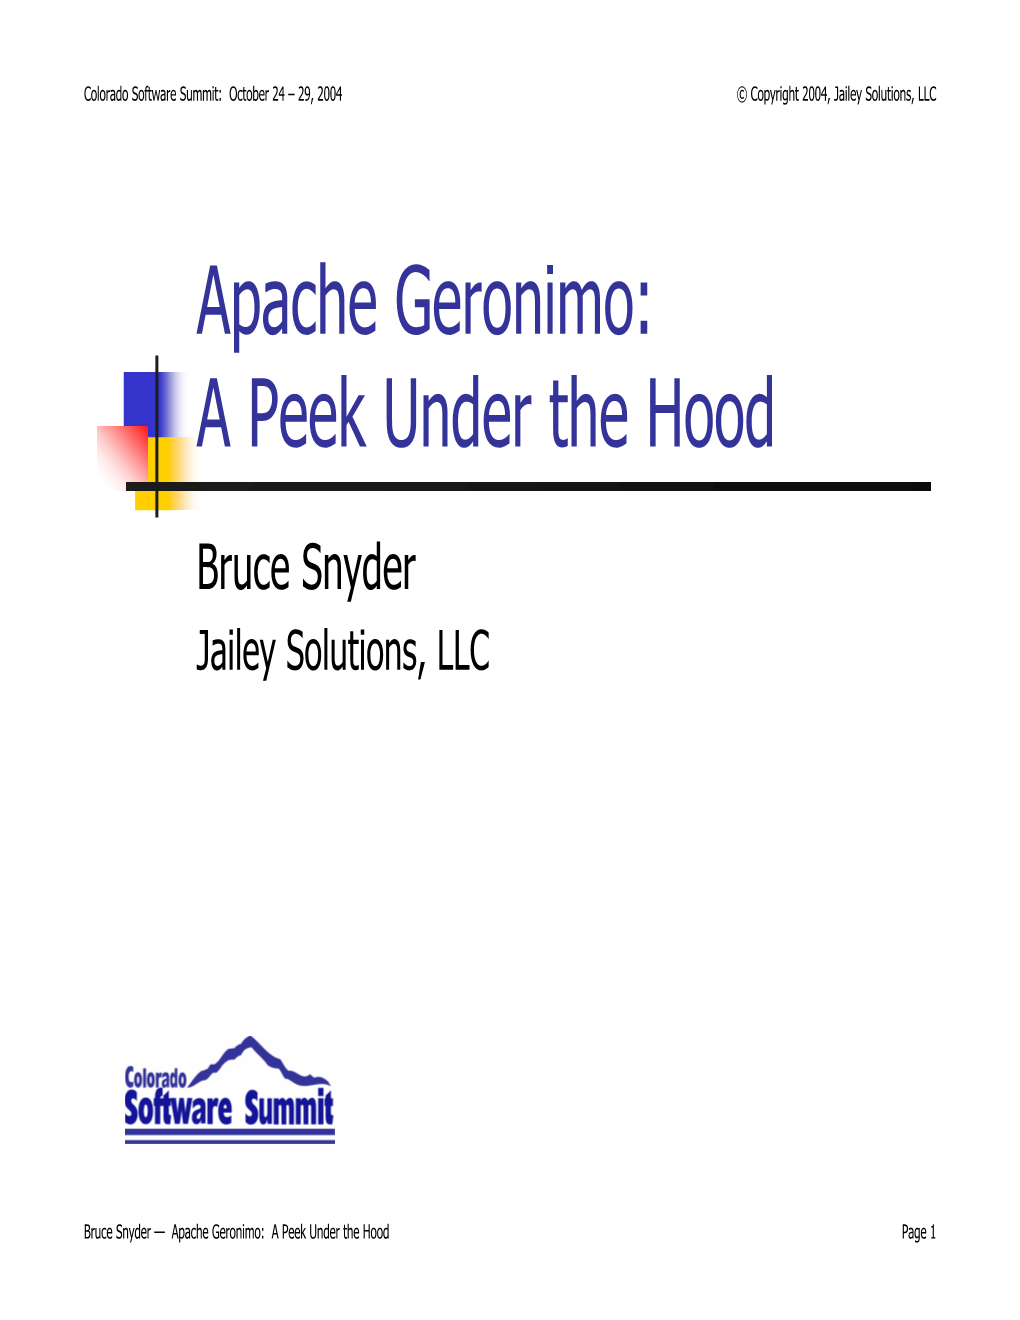 A Peek Under the Hood of Apache Geronimo